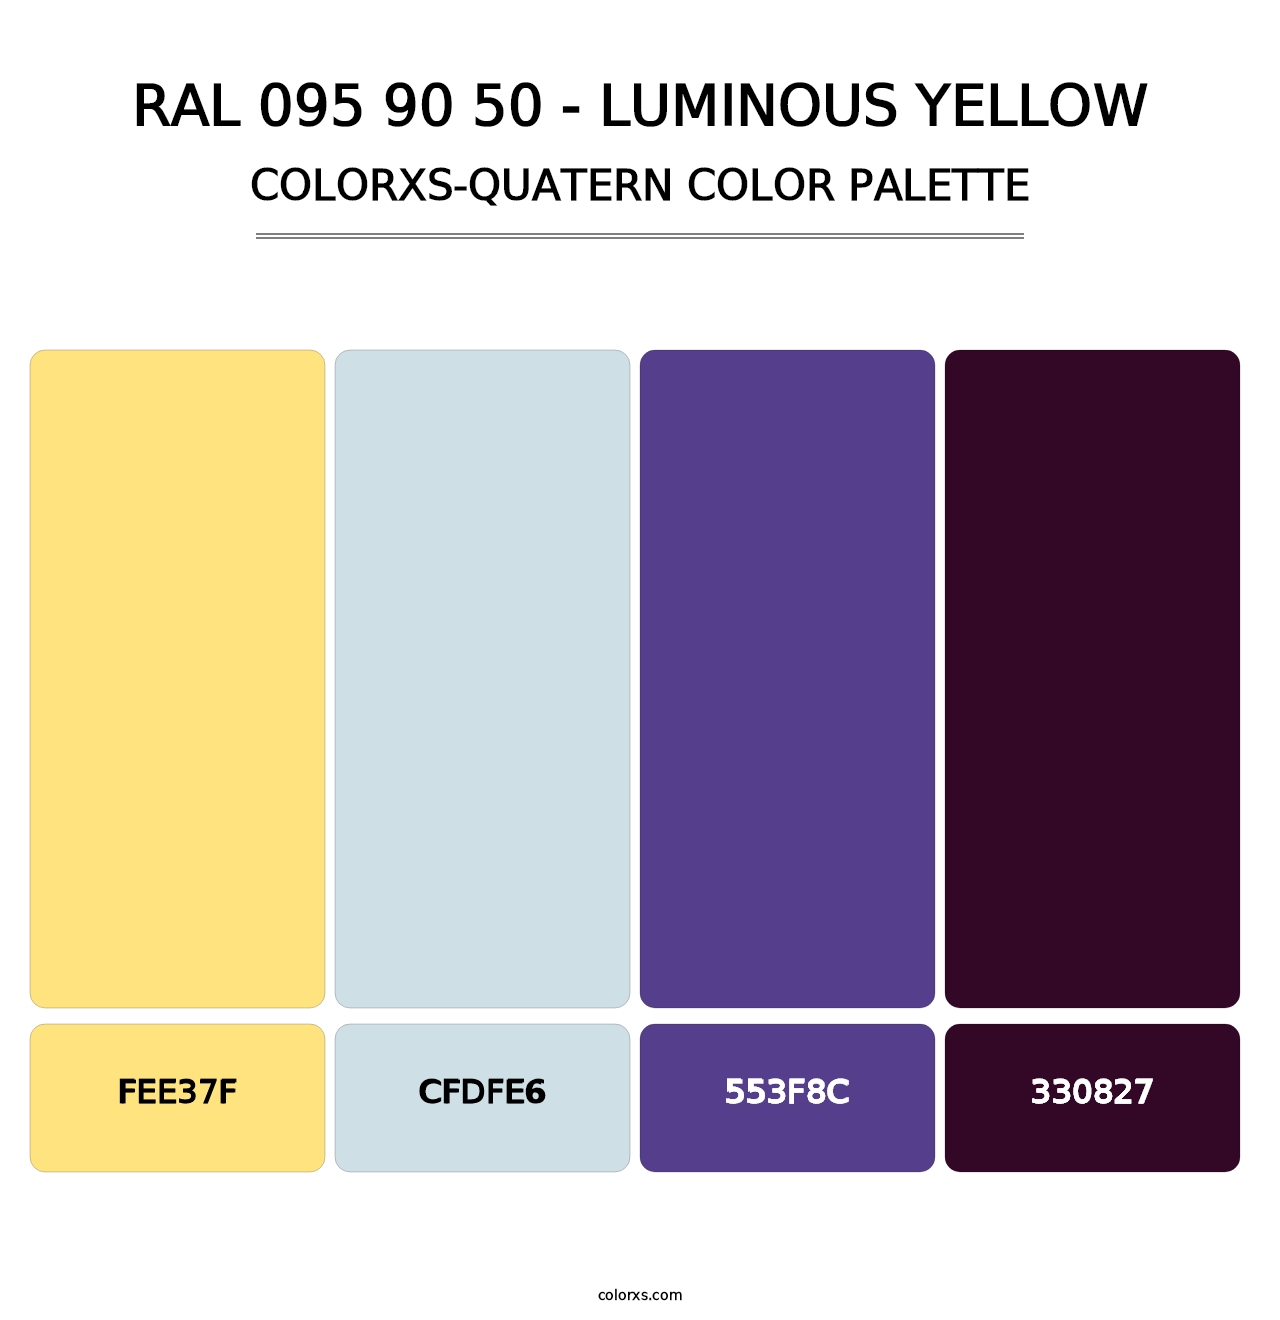 RAL 095 90 50 - Luminous Yellow - Colorxs Quatern Palette